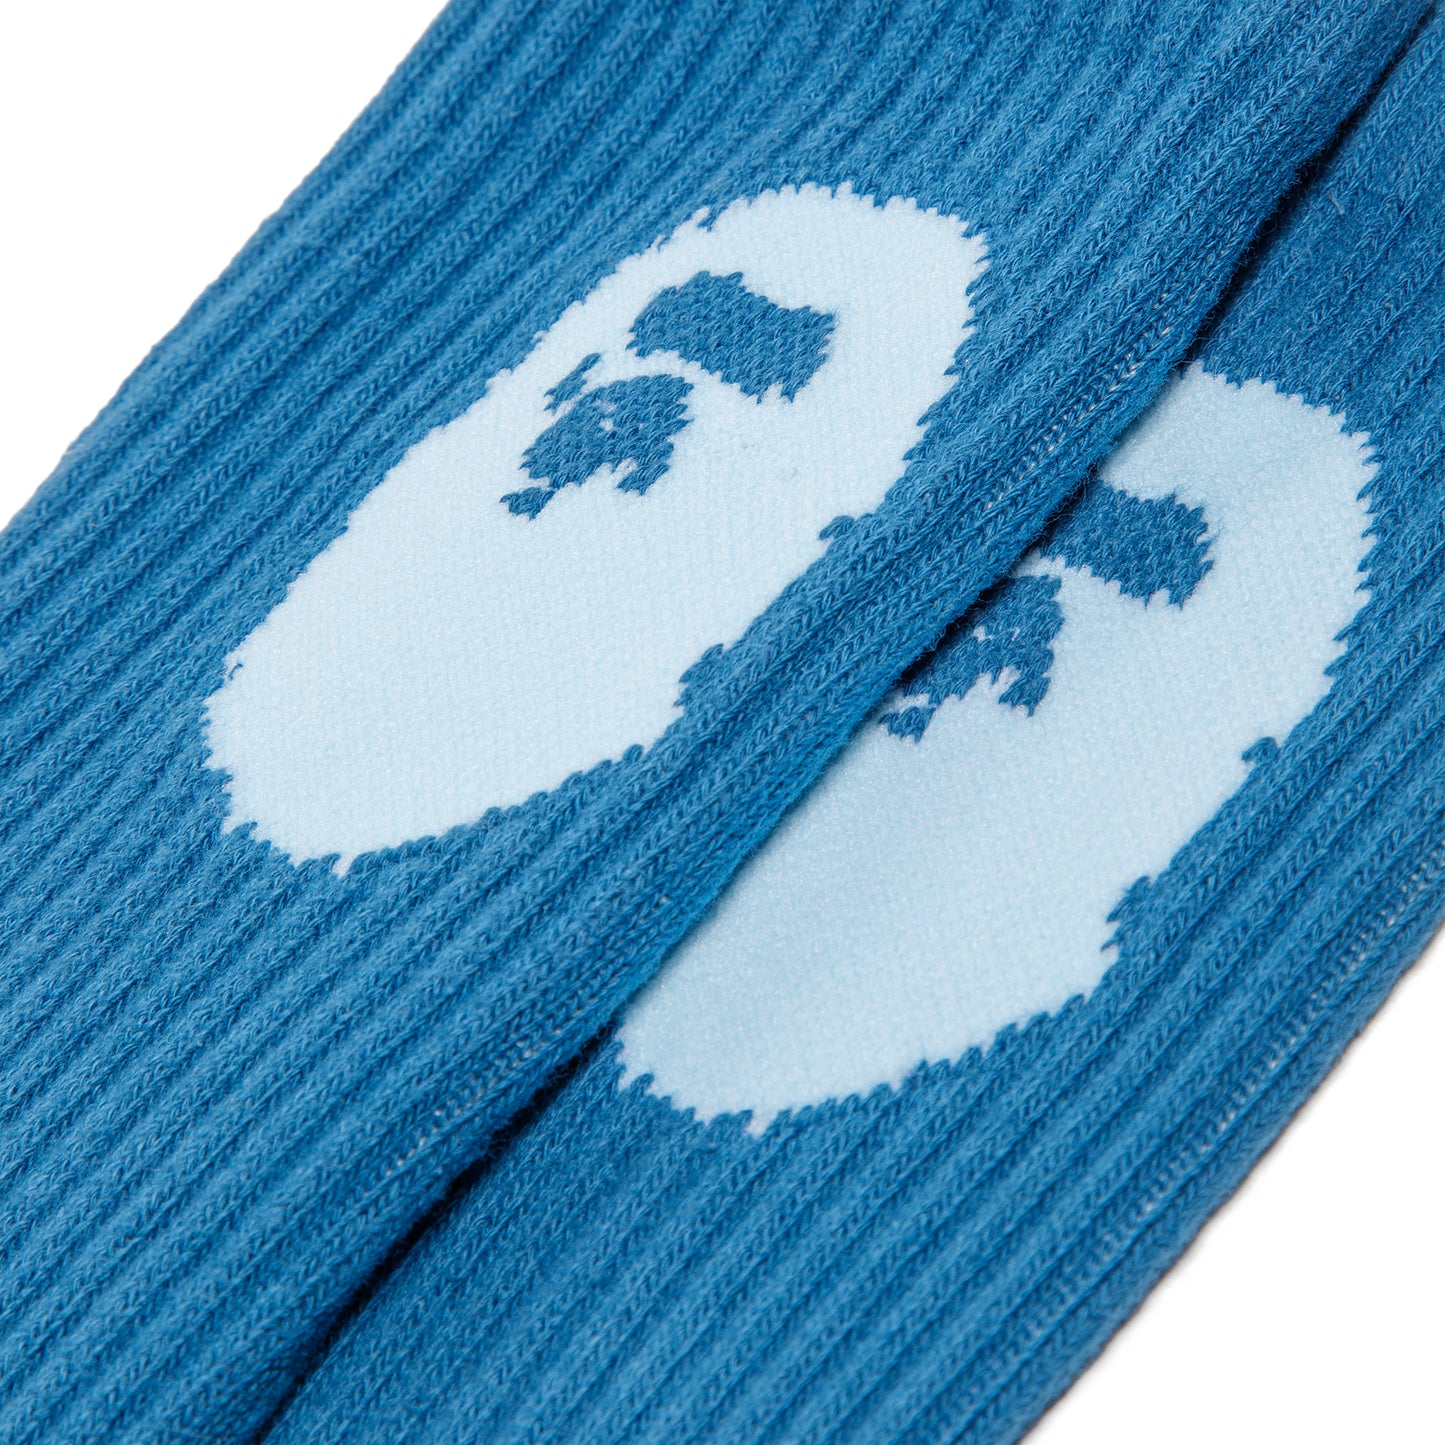 A Bathing Ape Gradation Socks (Blue)